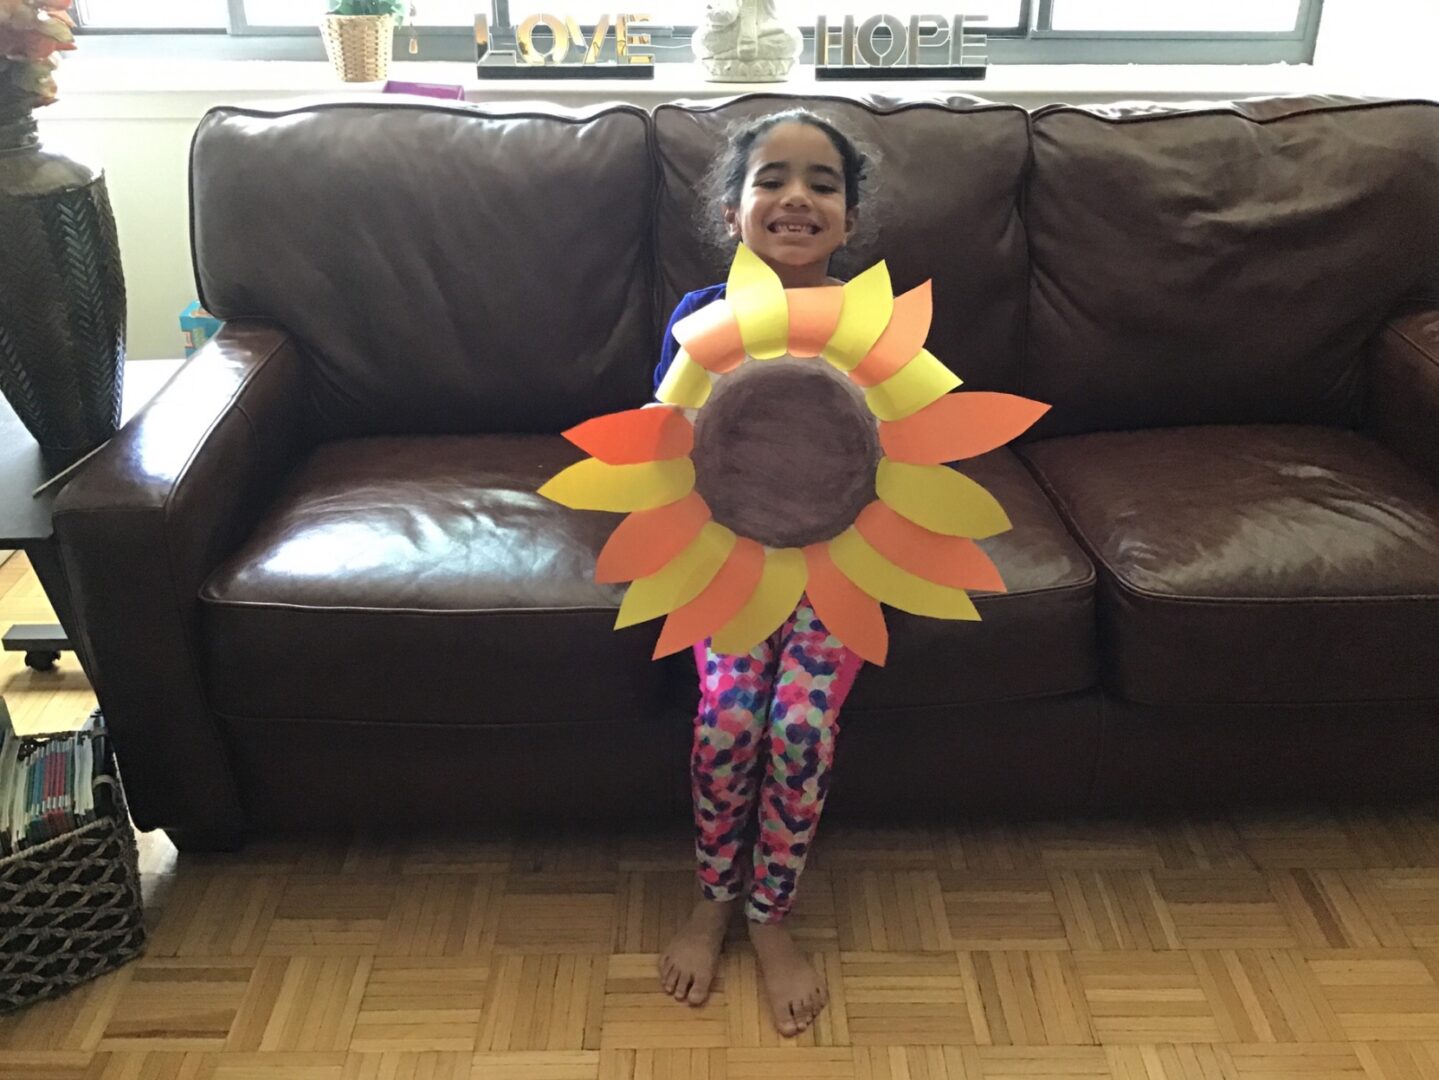 Toddler holding a paper sunflower art